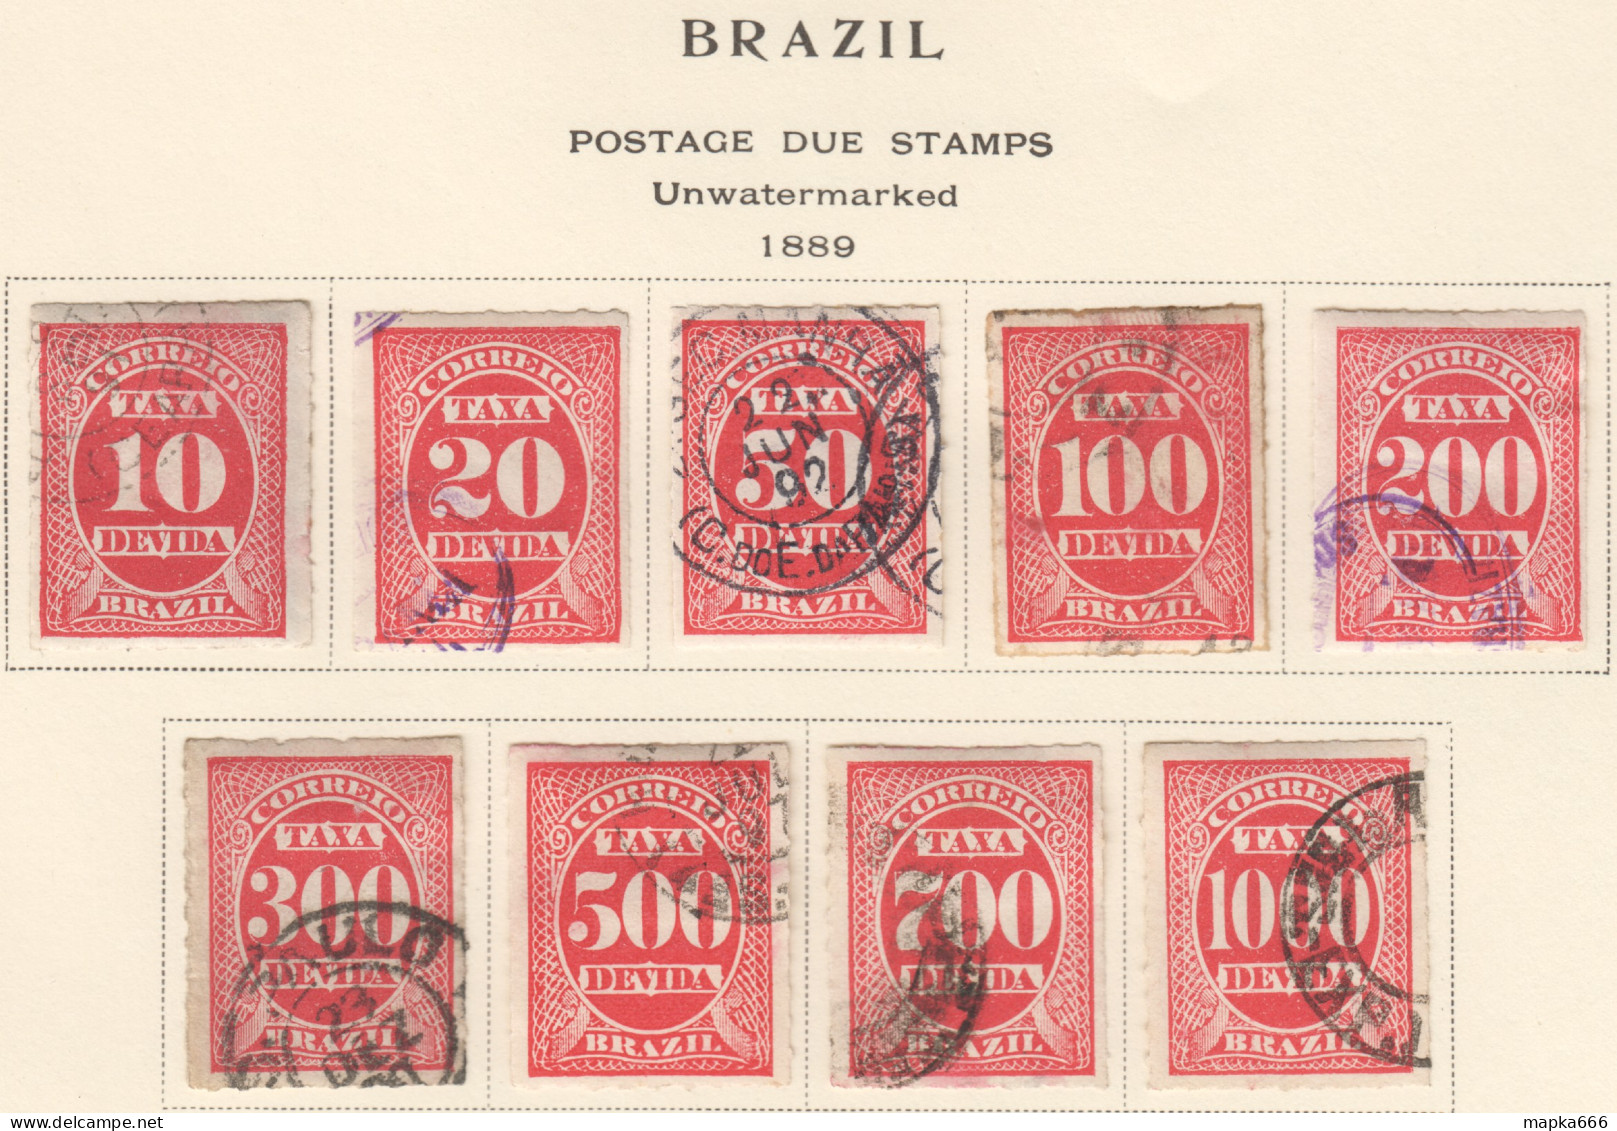 Bra184 1889 Brazil Postage Due Stamps Michel #1-9 85 Euro 1Set Used - Segnatasse